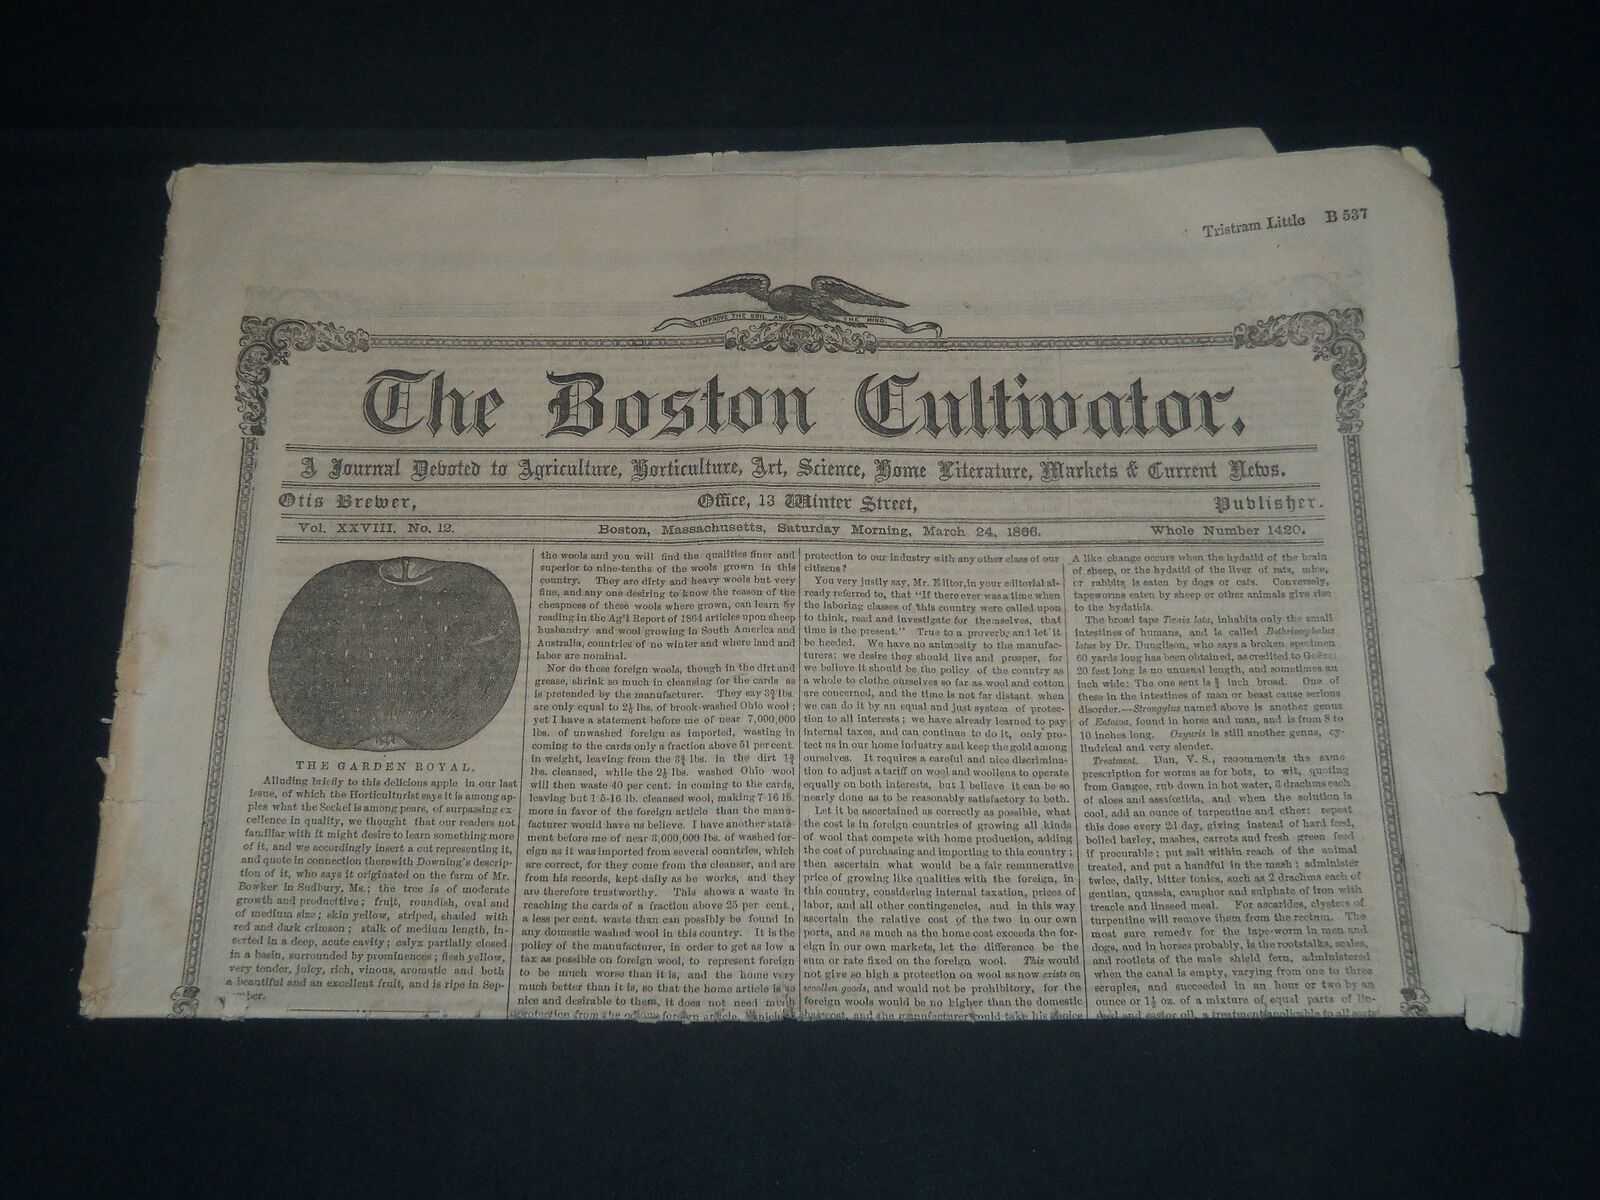 1866 MARCH 24 THE BOSTON CULTIVATOR NEWSPAPER - BARON LIEBIG - NP 3967